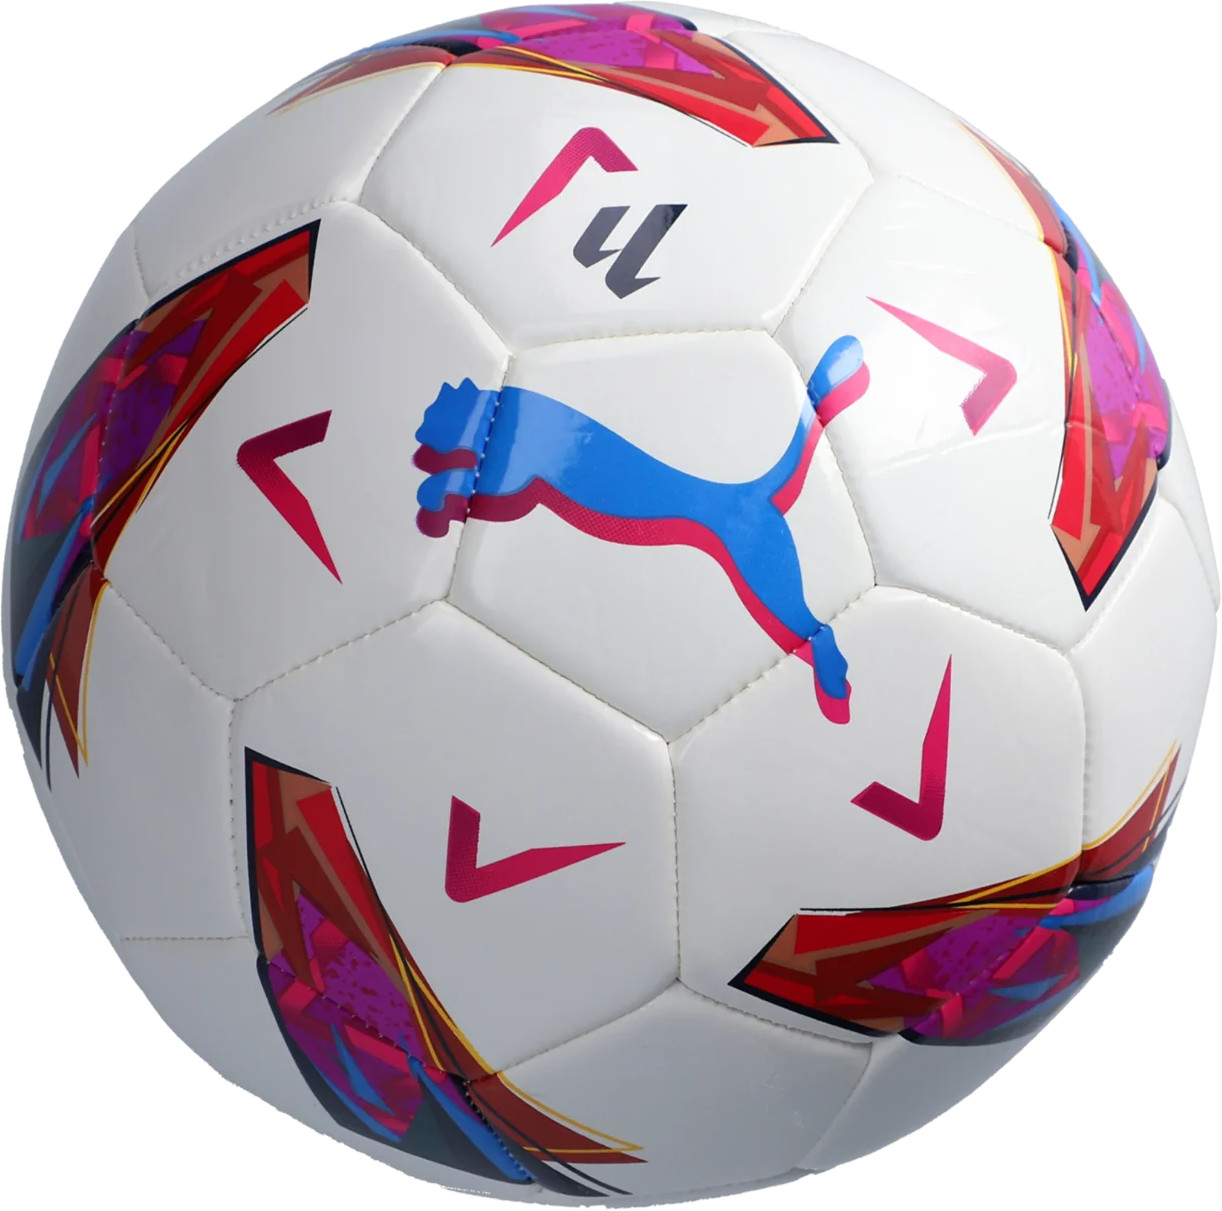 Puma Orbita 1 La Liga Replica Training Ball